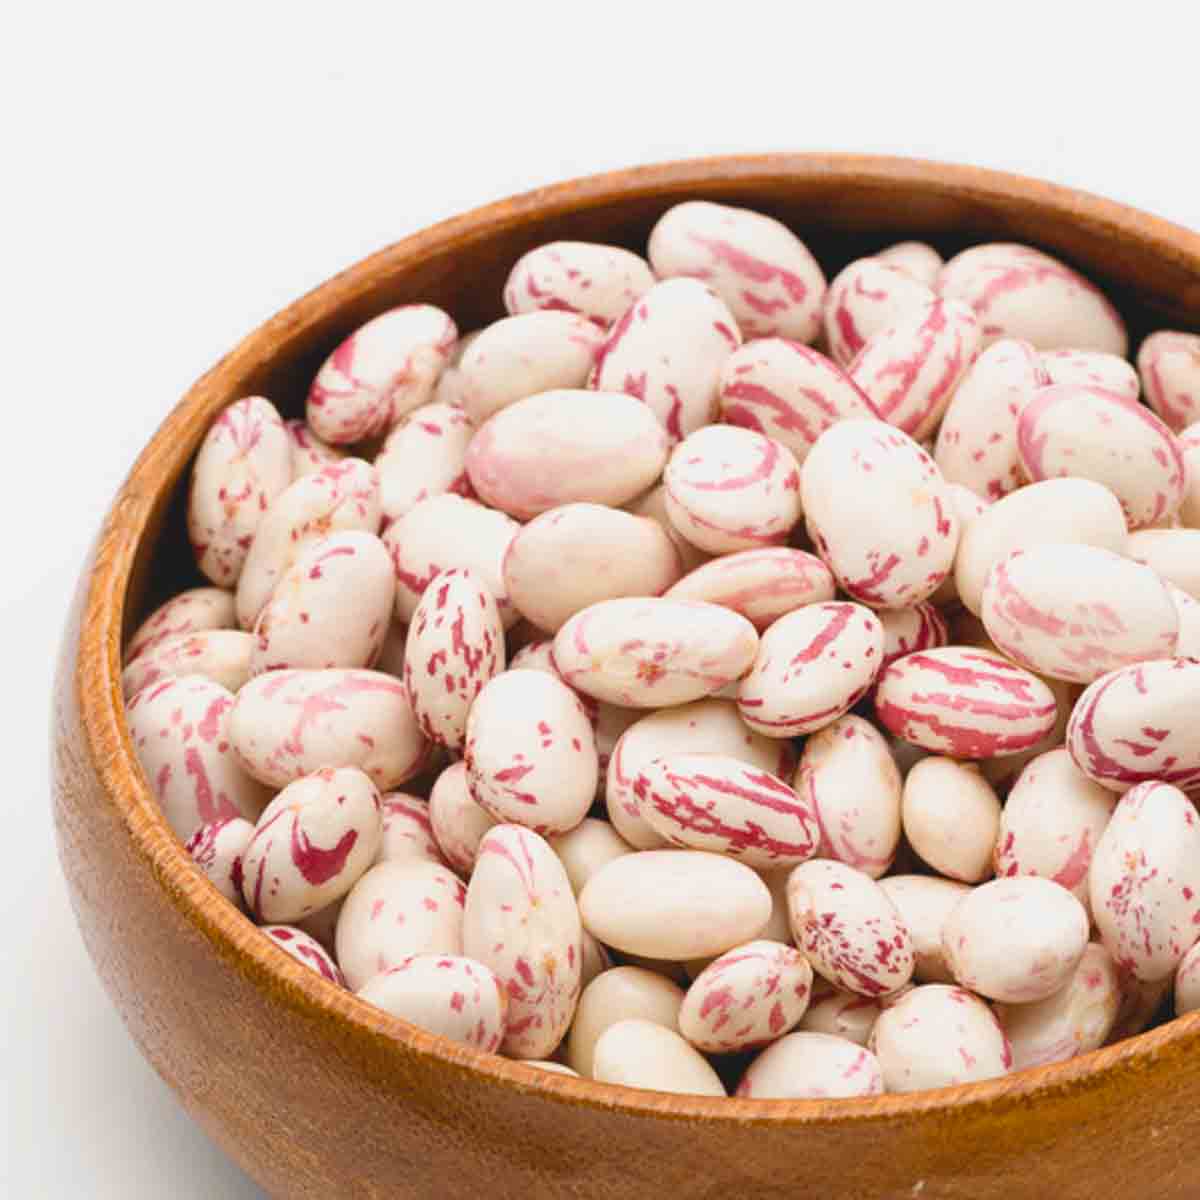 Ponoka Sustainable Non-GMO Goods: Make A Wholesale Order For Beans & Grains